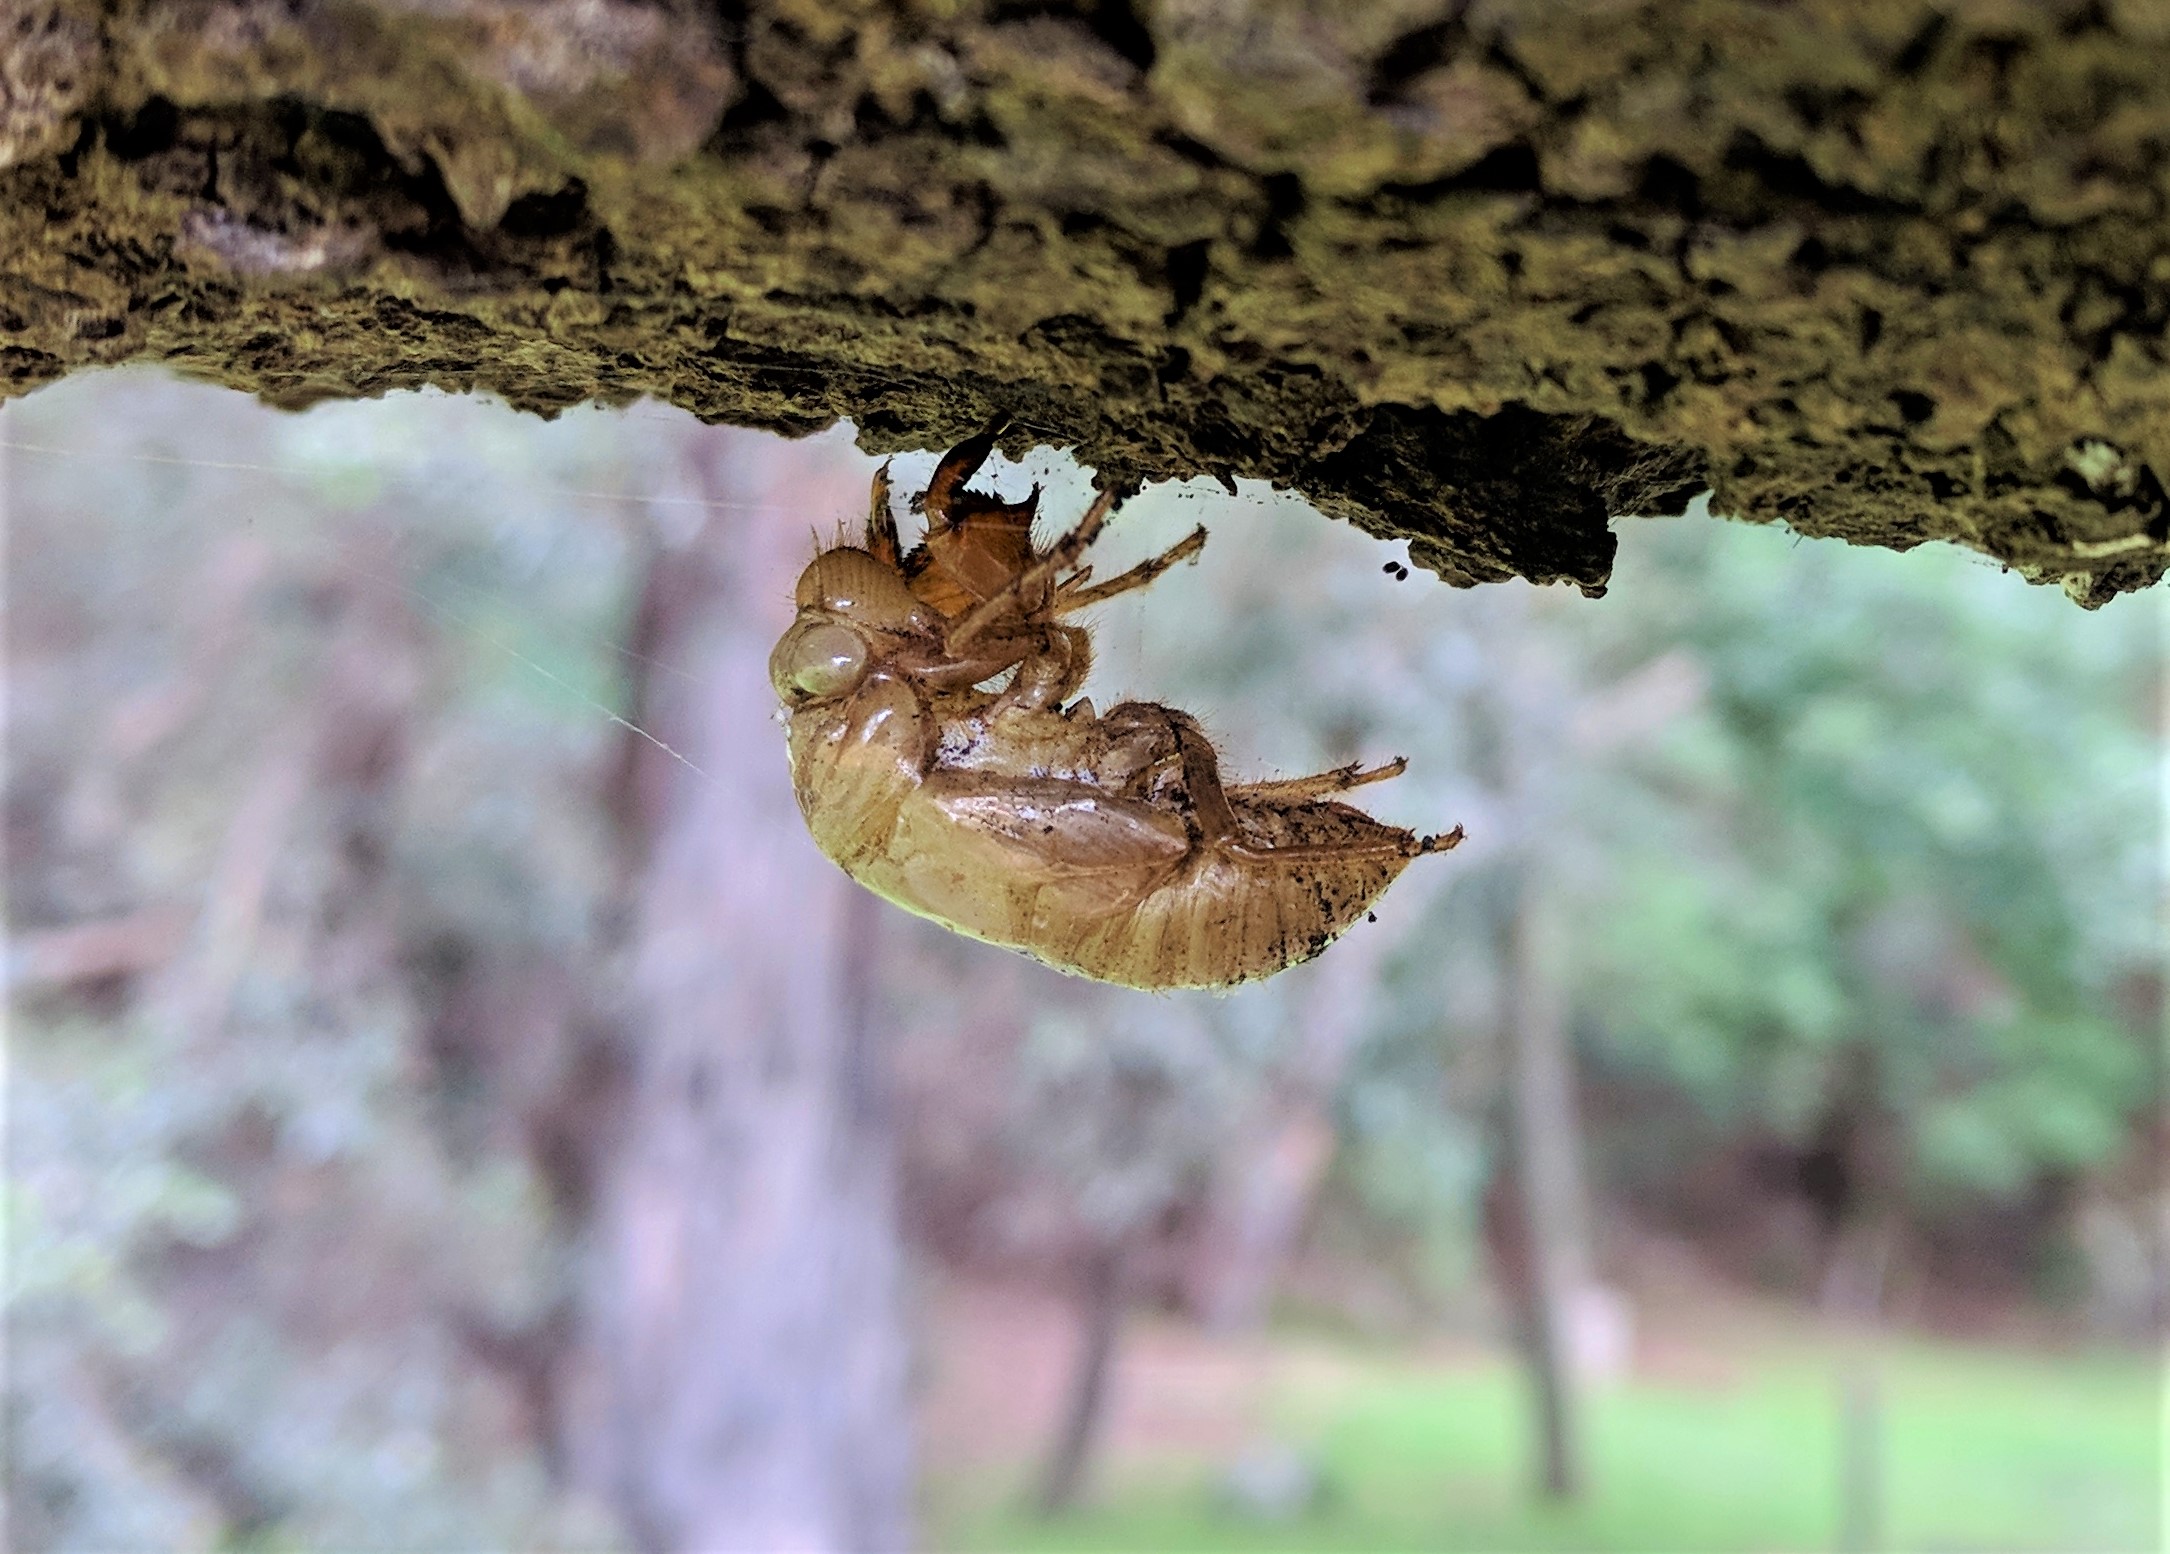 Cicada Exoskeleton under tree branch